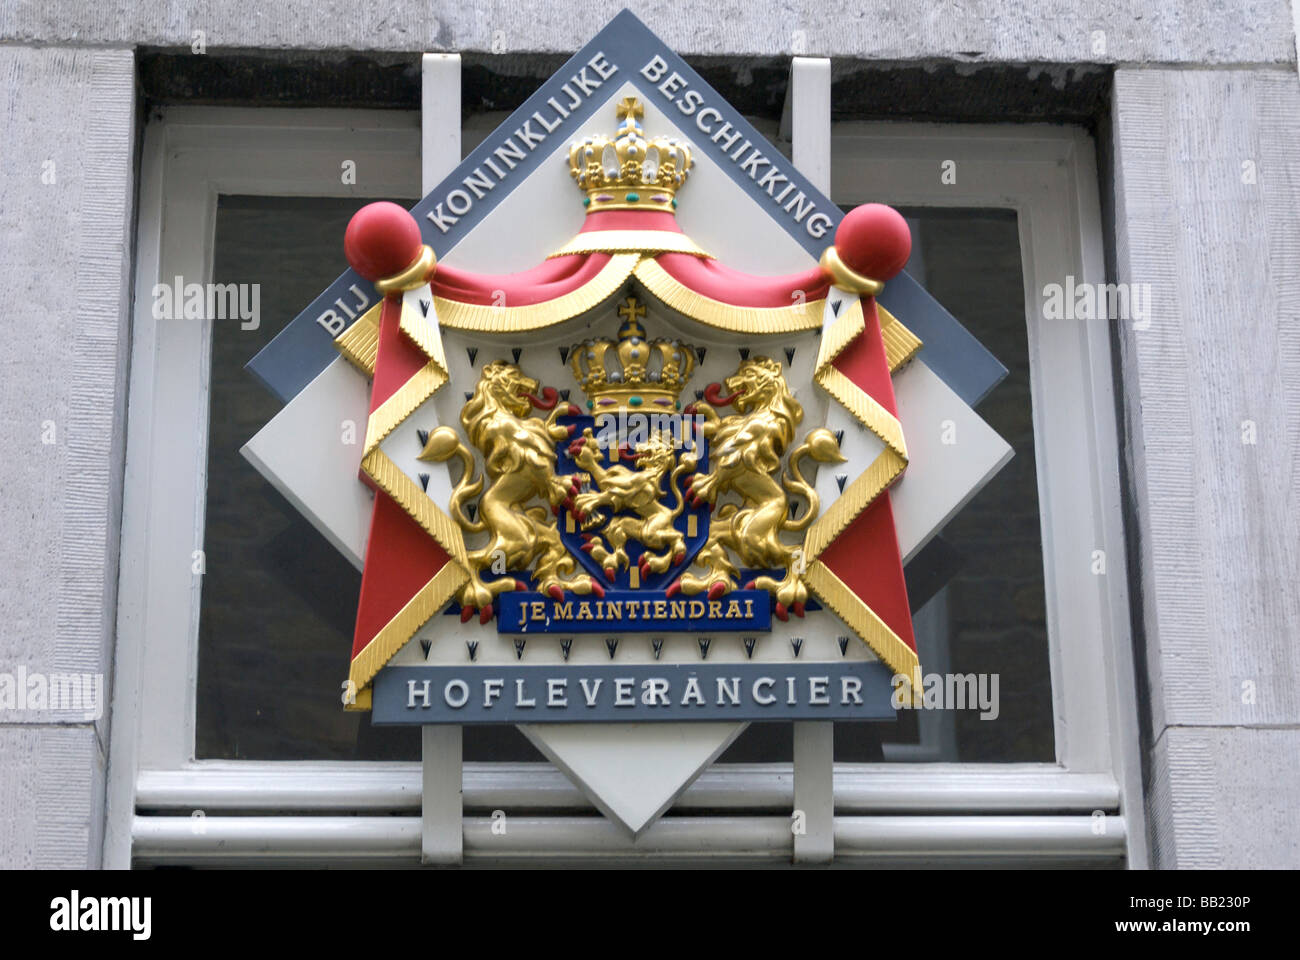 Europe, Limburg, Maastricht, Netherlands, Royal Warrant symbol, royal purveyor. Stock Photo